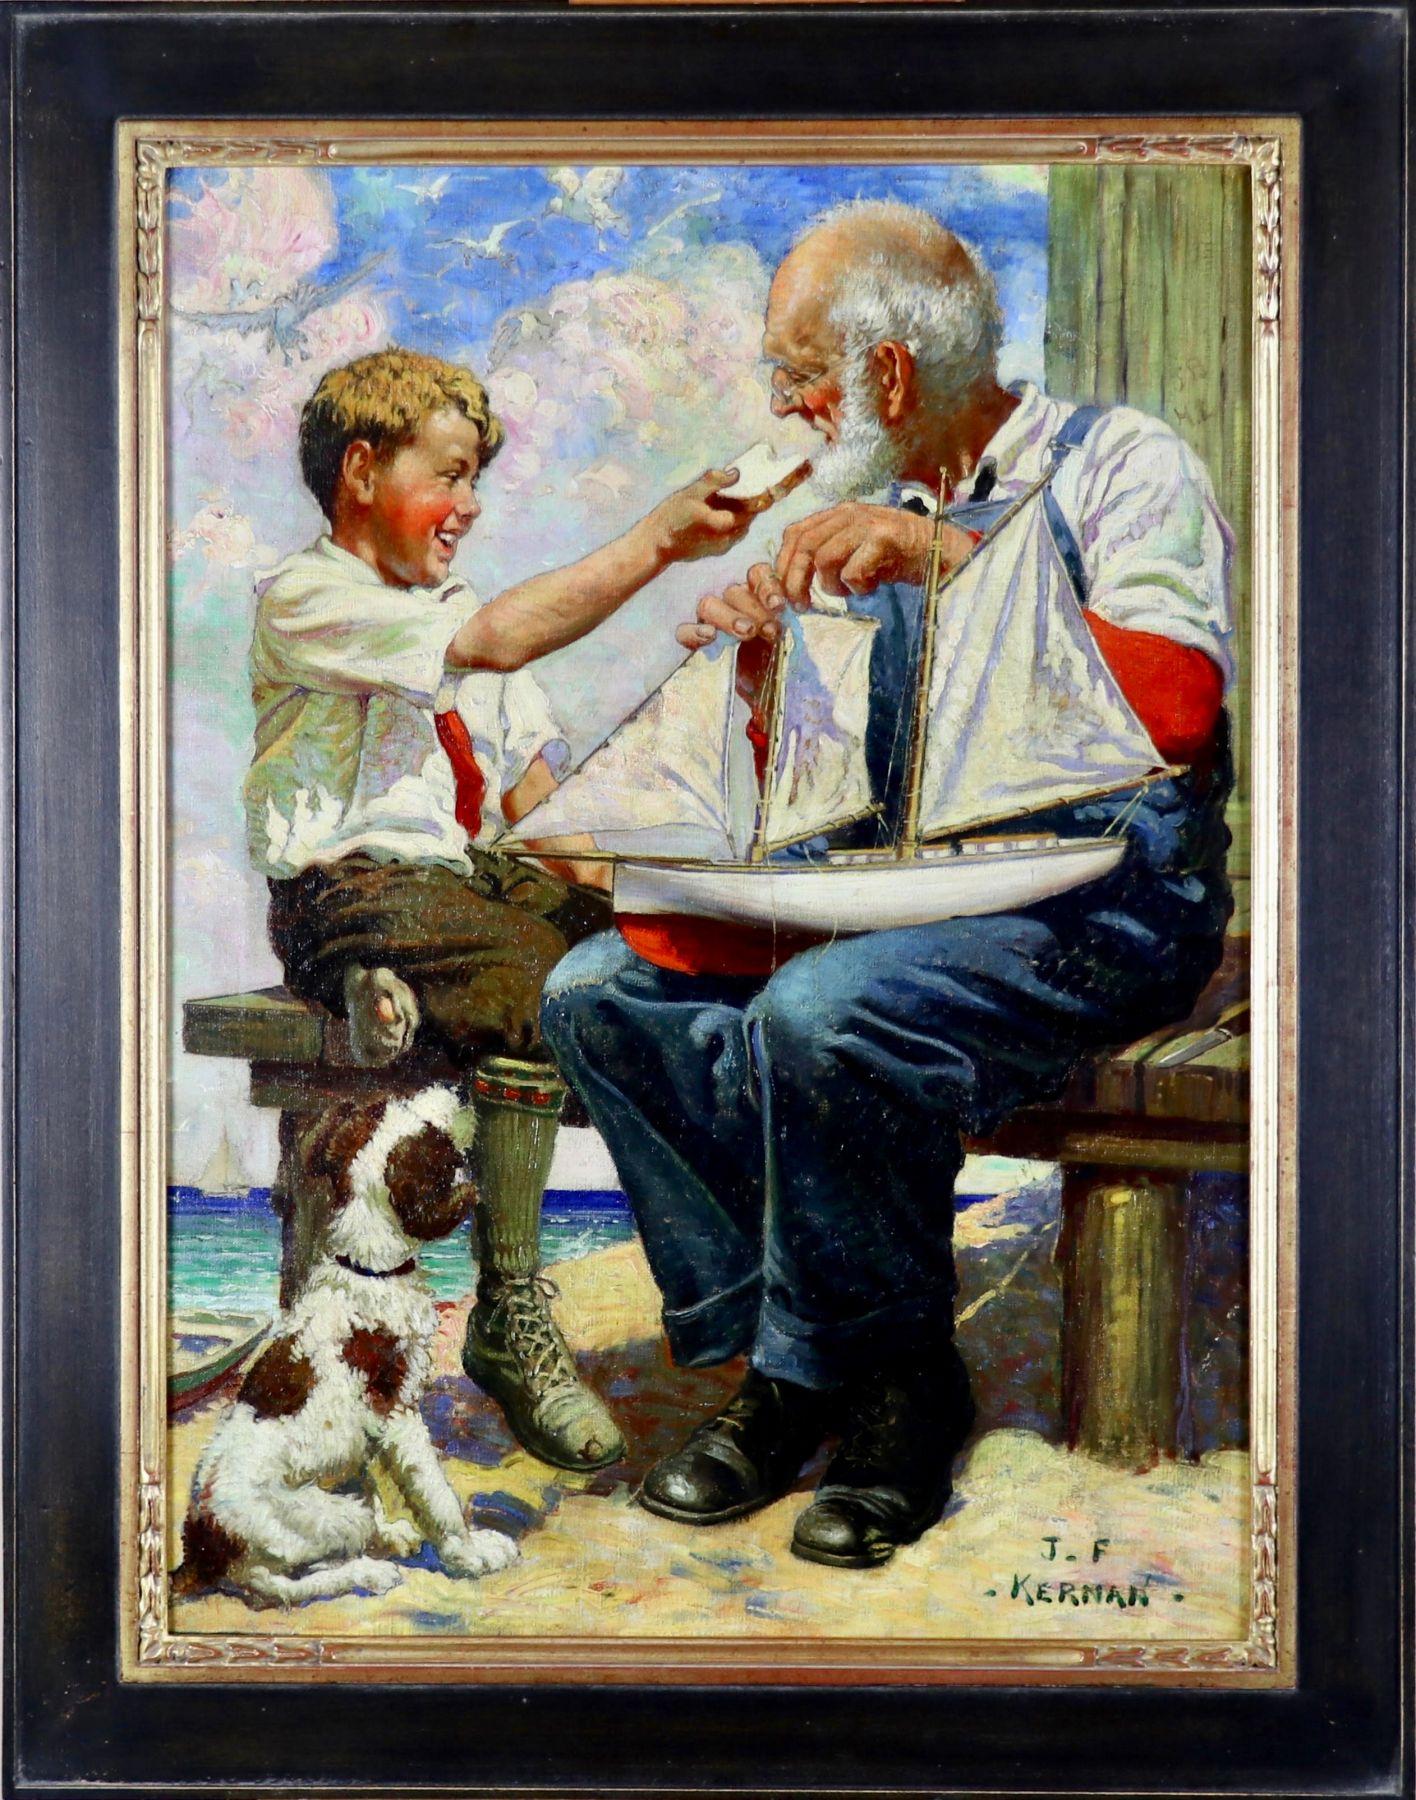 Sunday with Grandpa - Painting by Joseph Francis Kernan